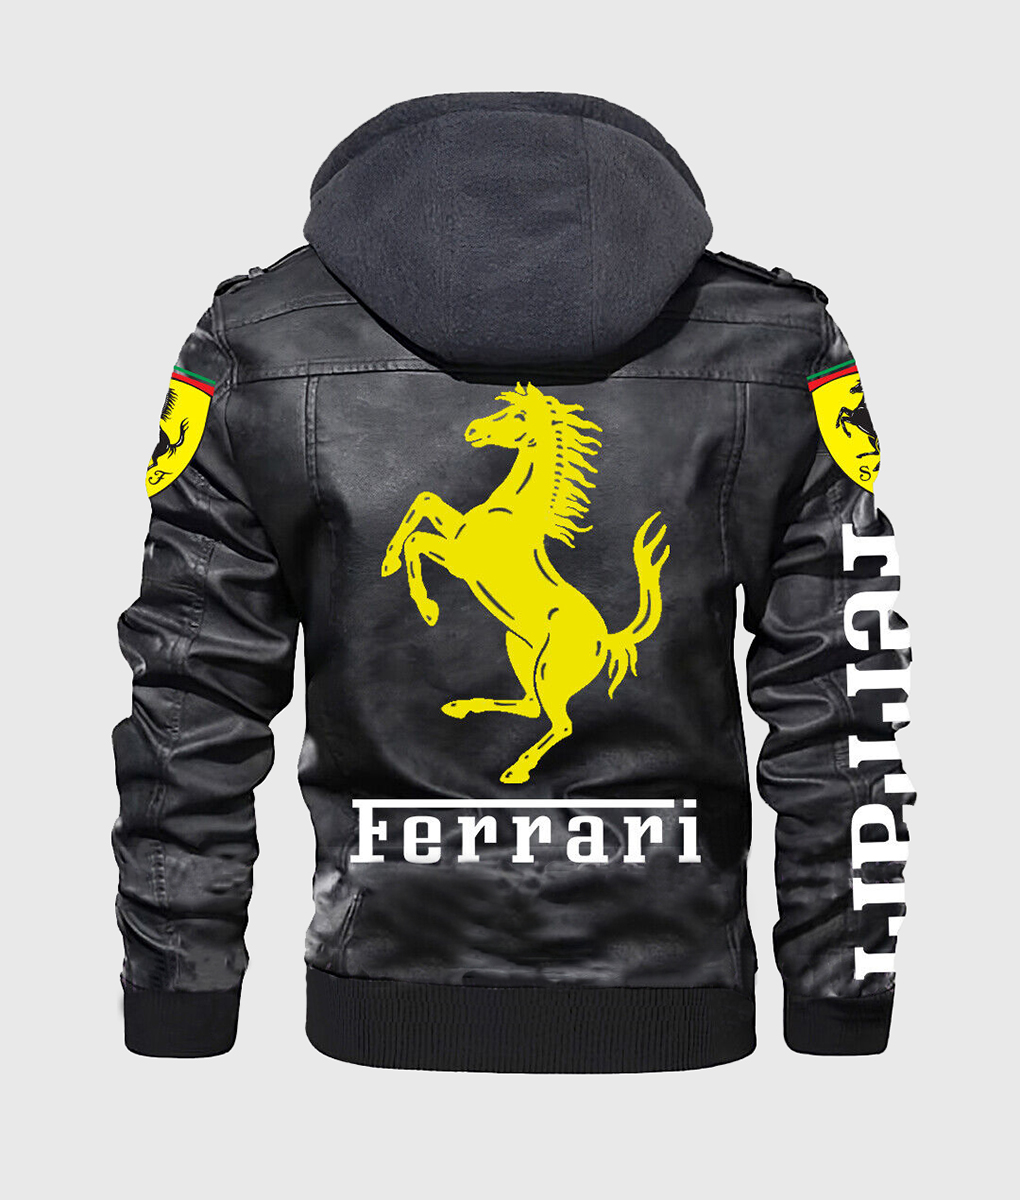 Ferrari F1 Black Leather Jacket (2)